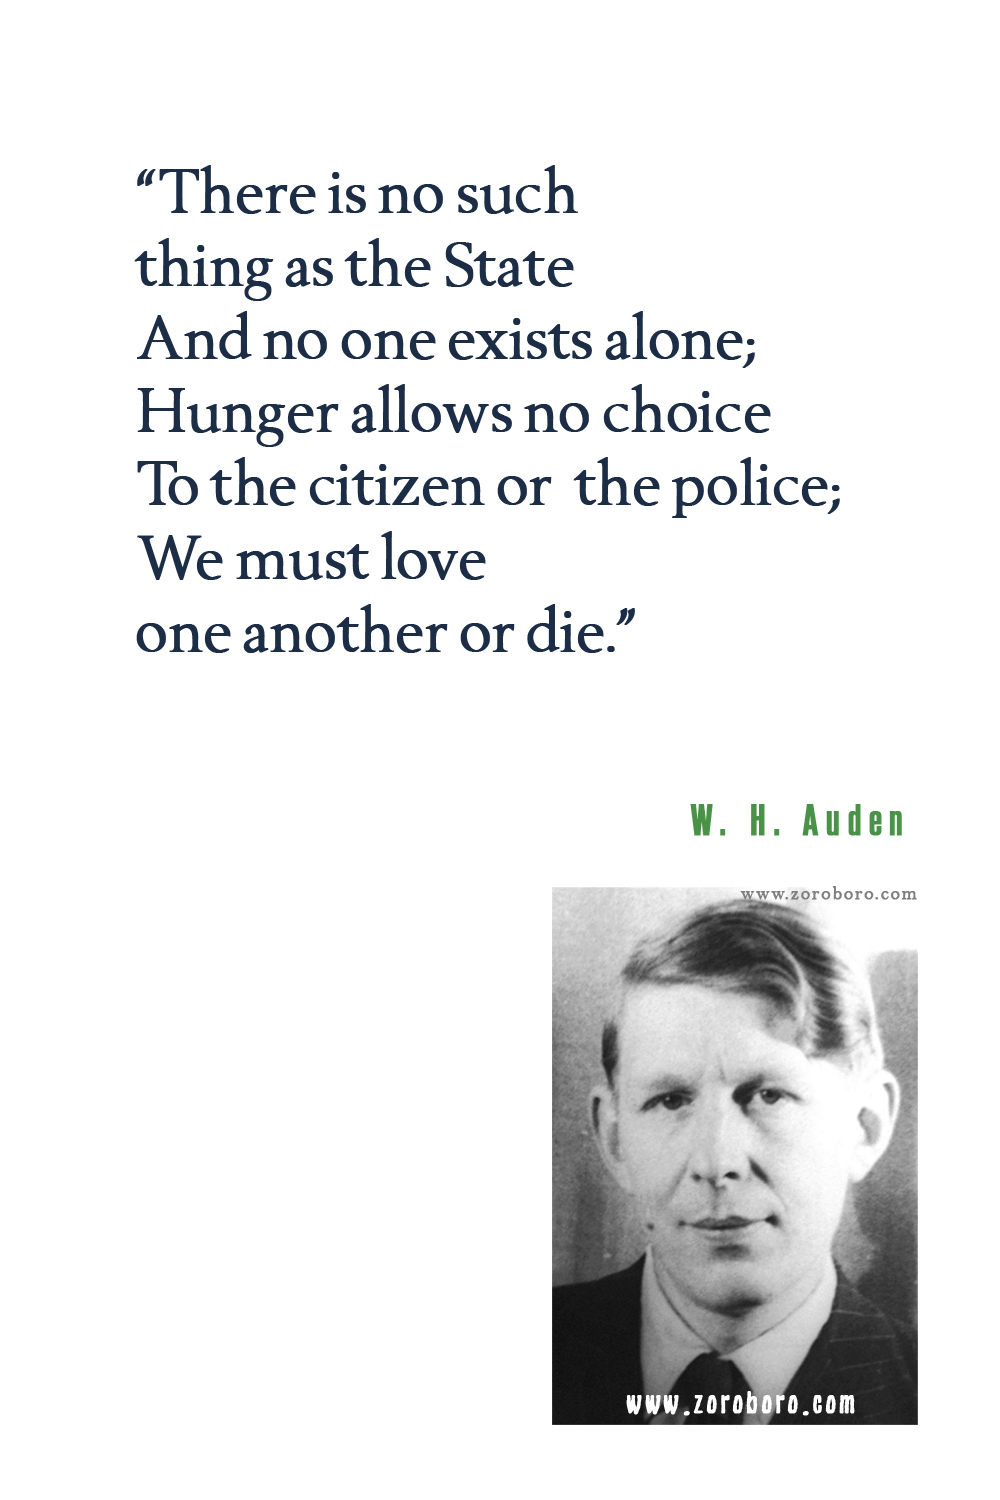 W.H. Auden Quotes, W.H. Auden Poet, W.H. Auden Poetry, W.H. Auden Poems, W.H. Auden Books Quotes, W.H. Auden Writings.